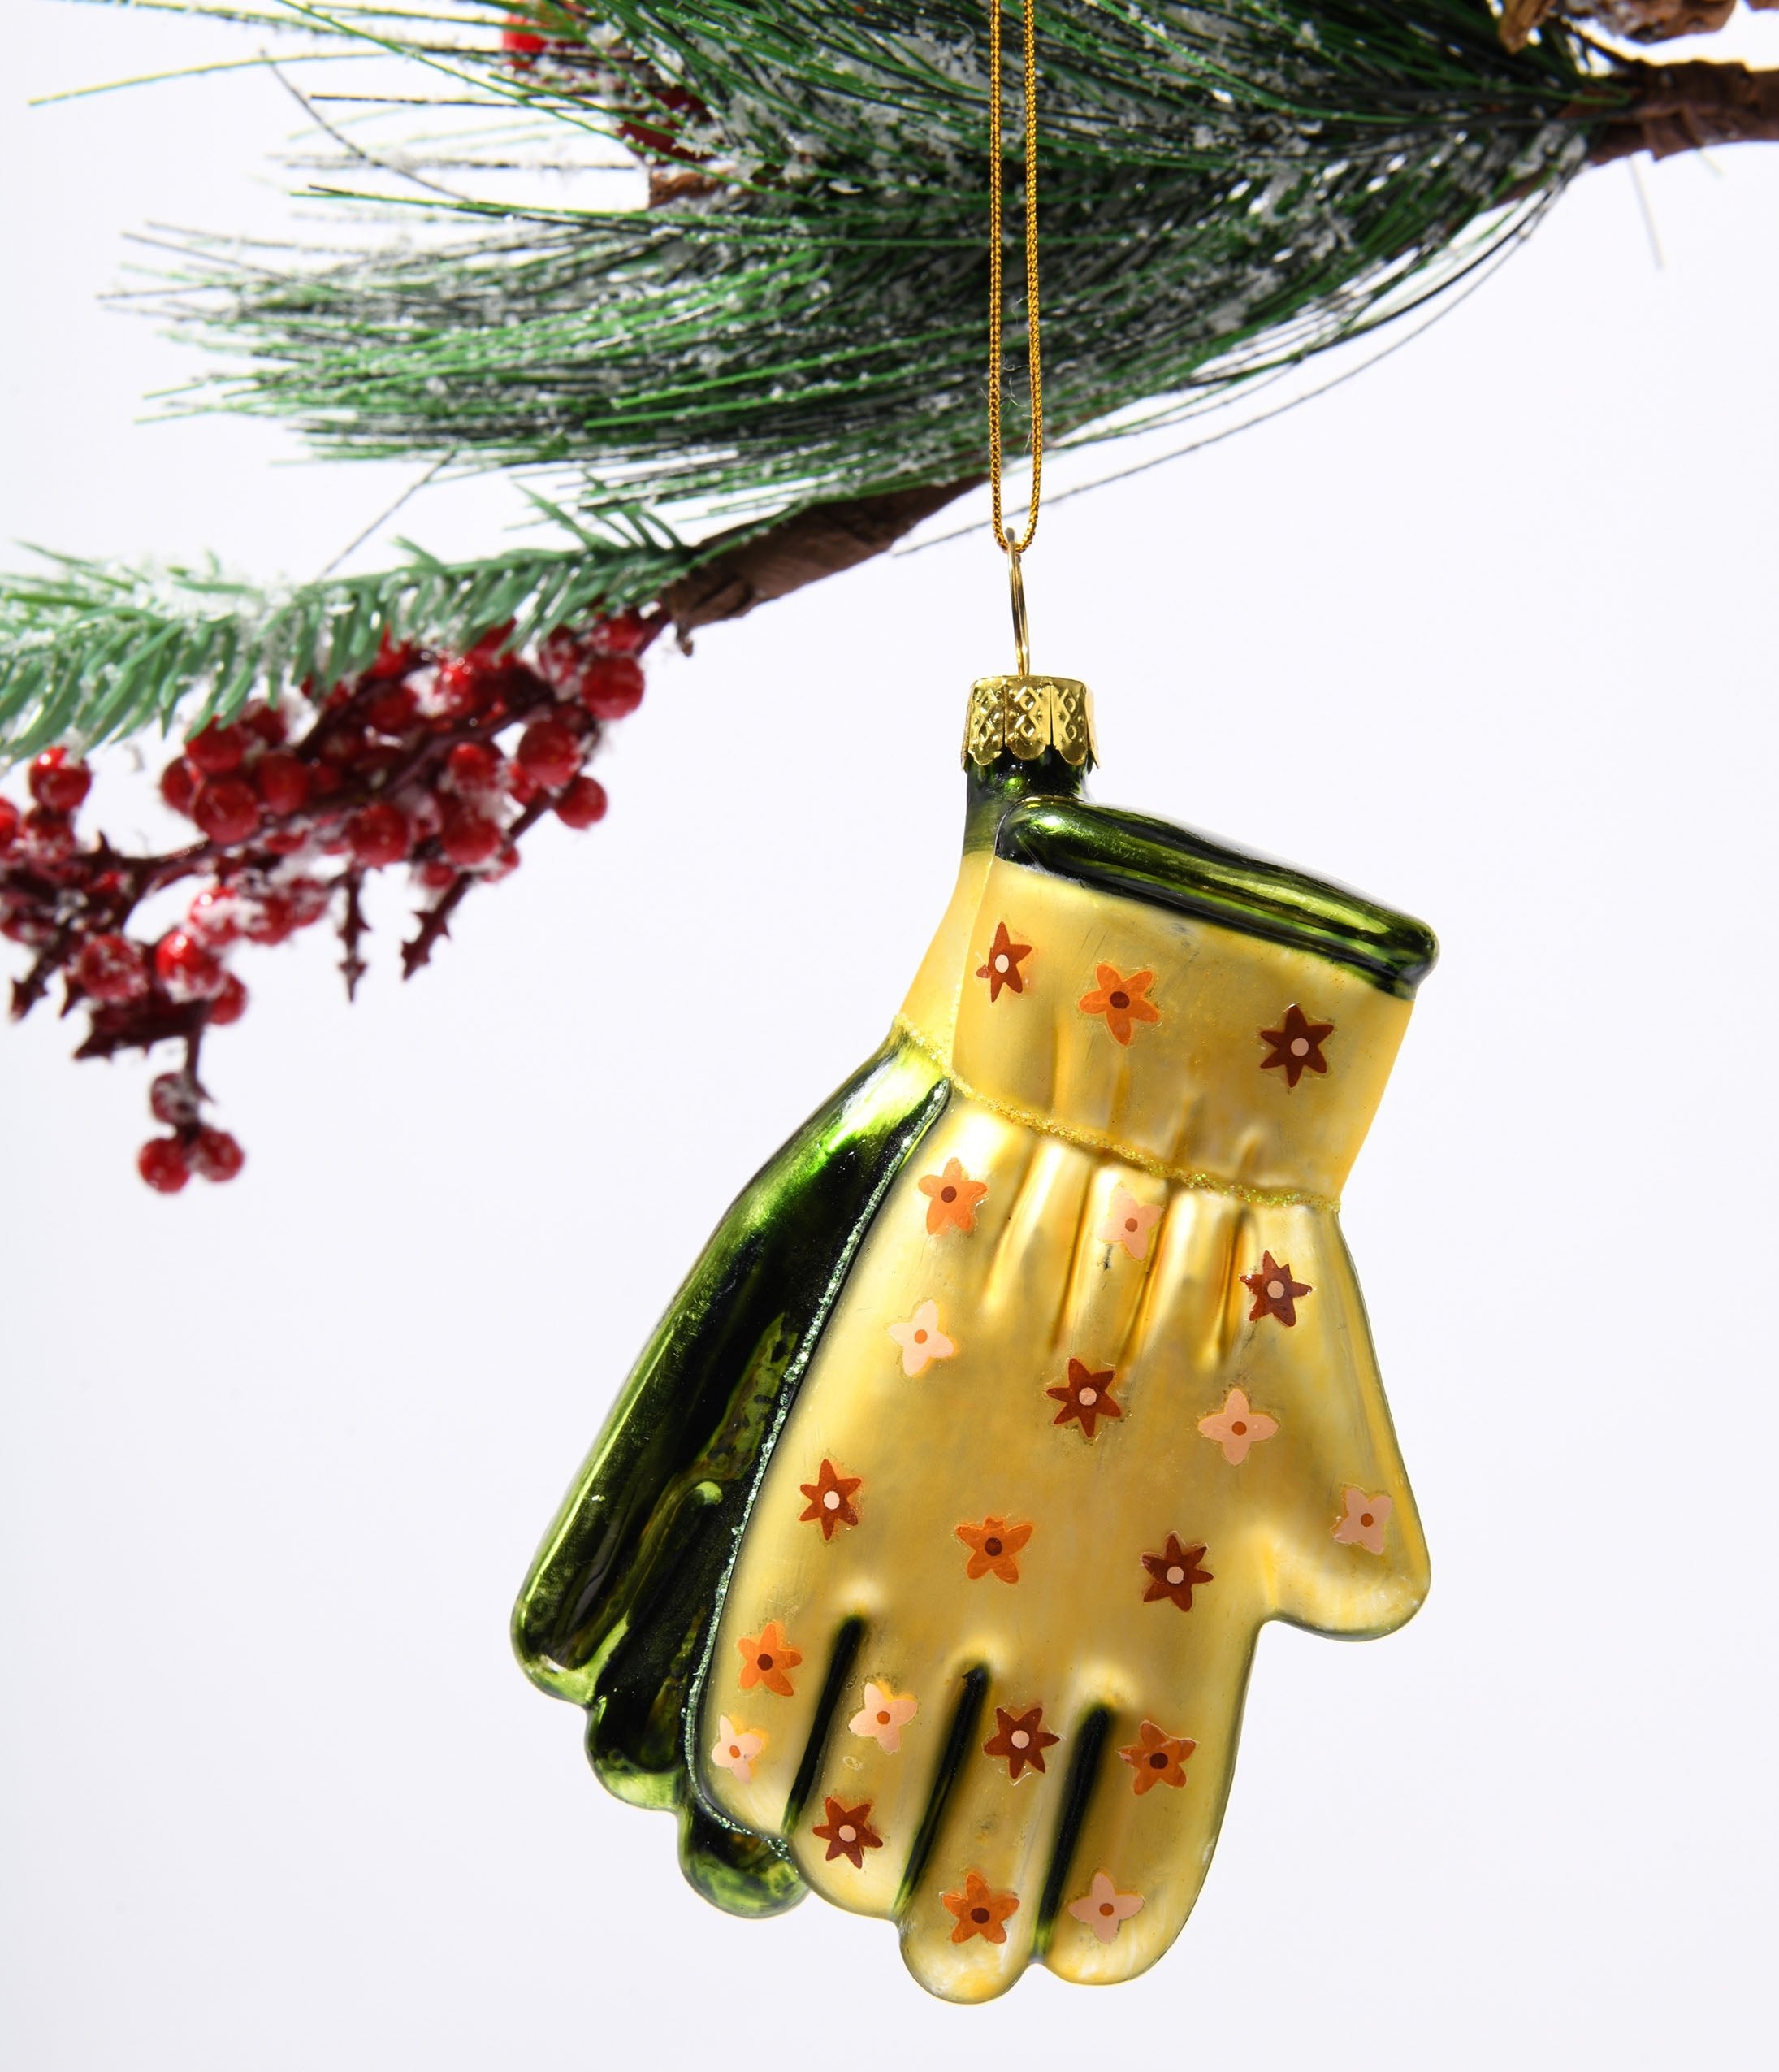 

Yellow & Green Gardening Gloves Glass Ornament